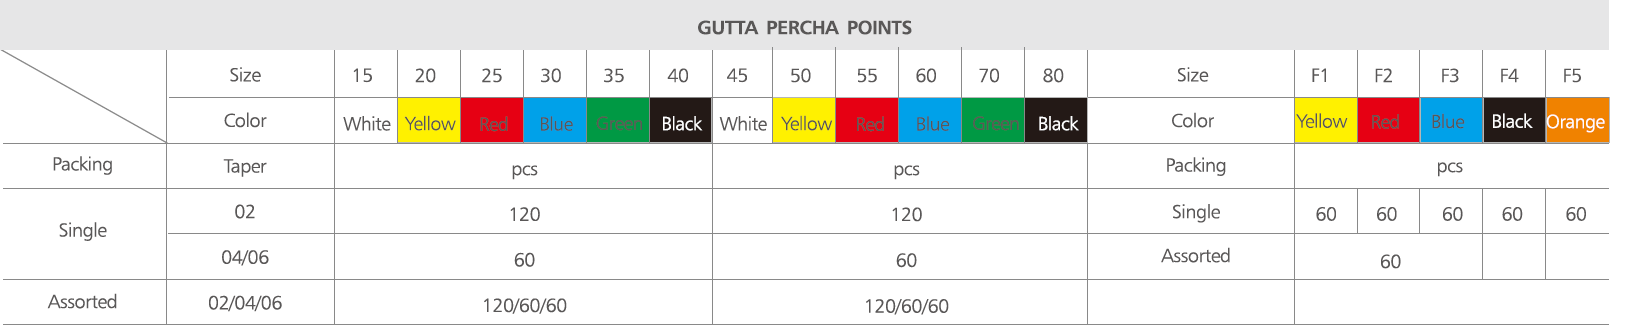 gutta percha points parameter